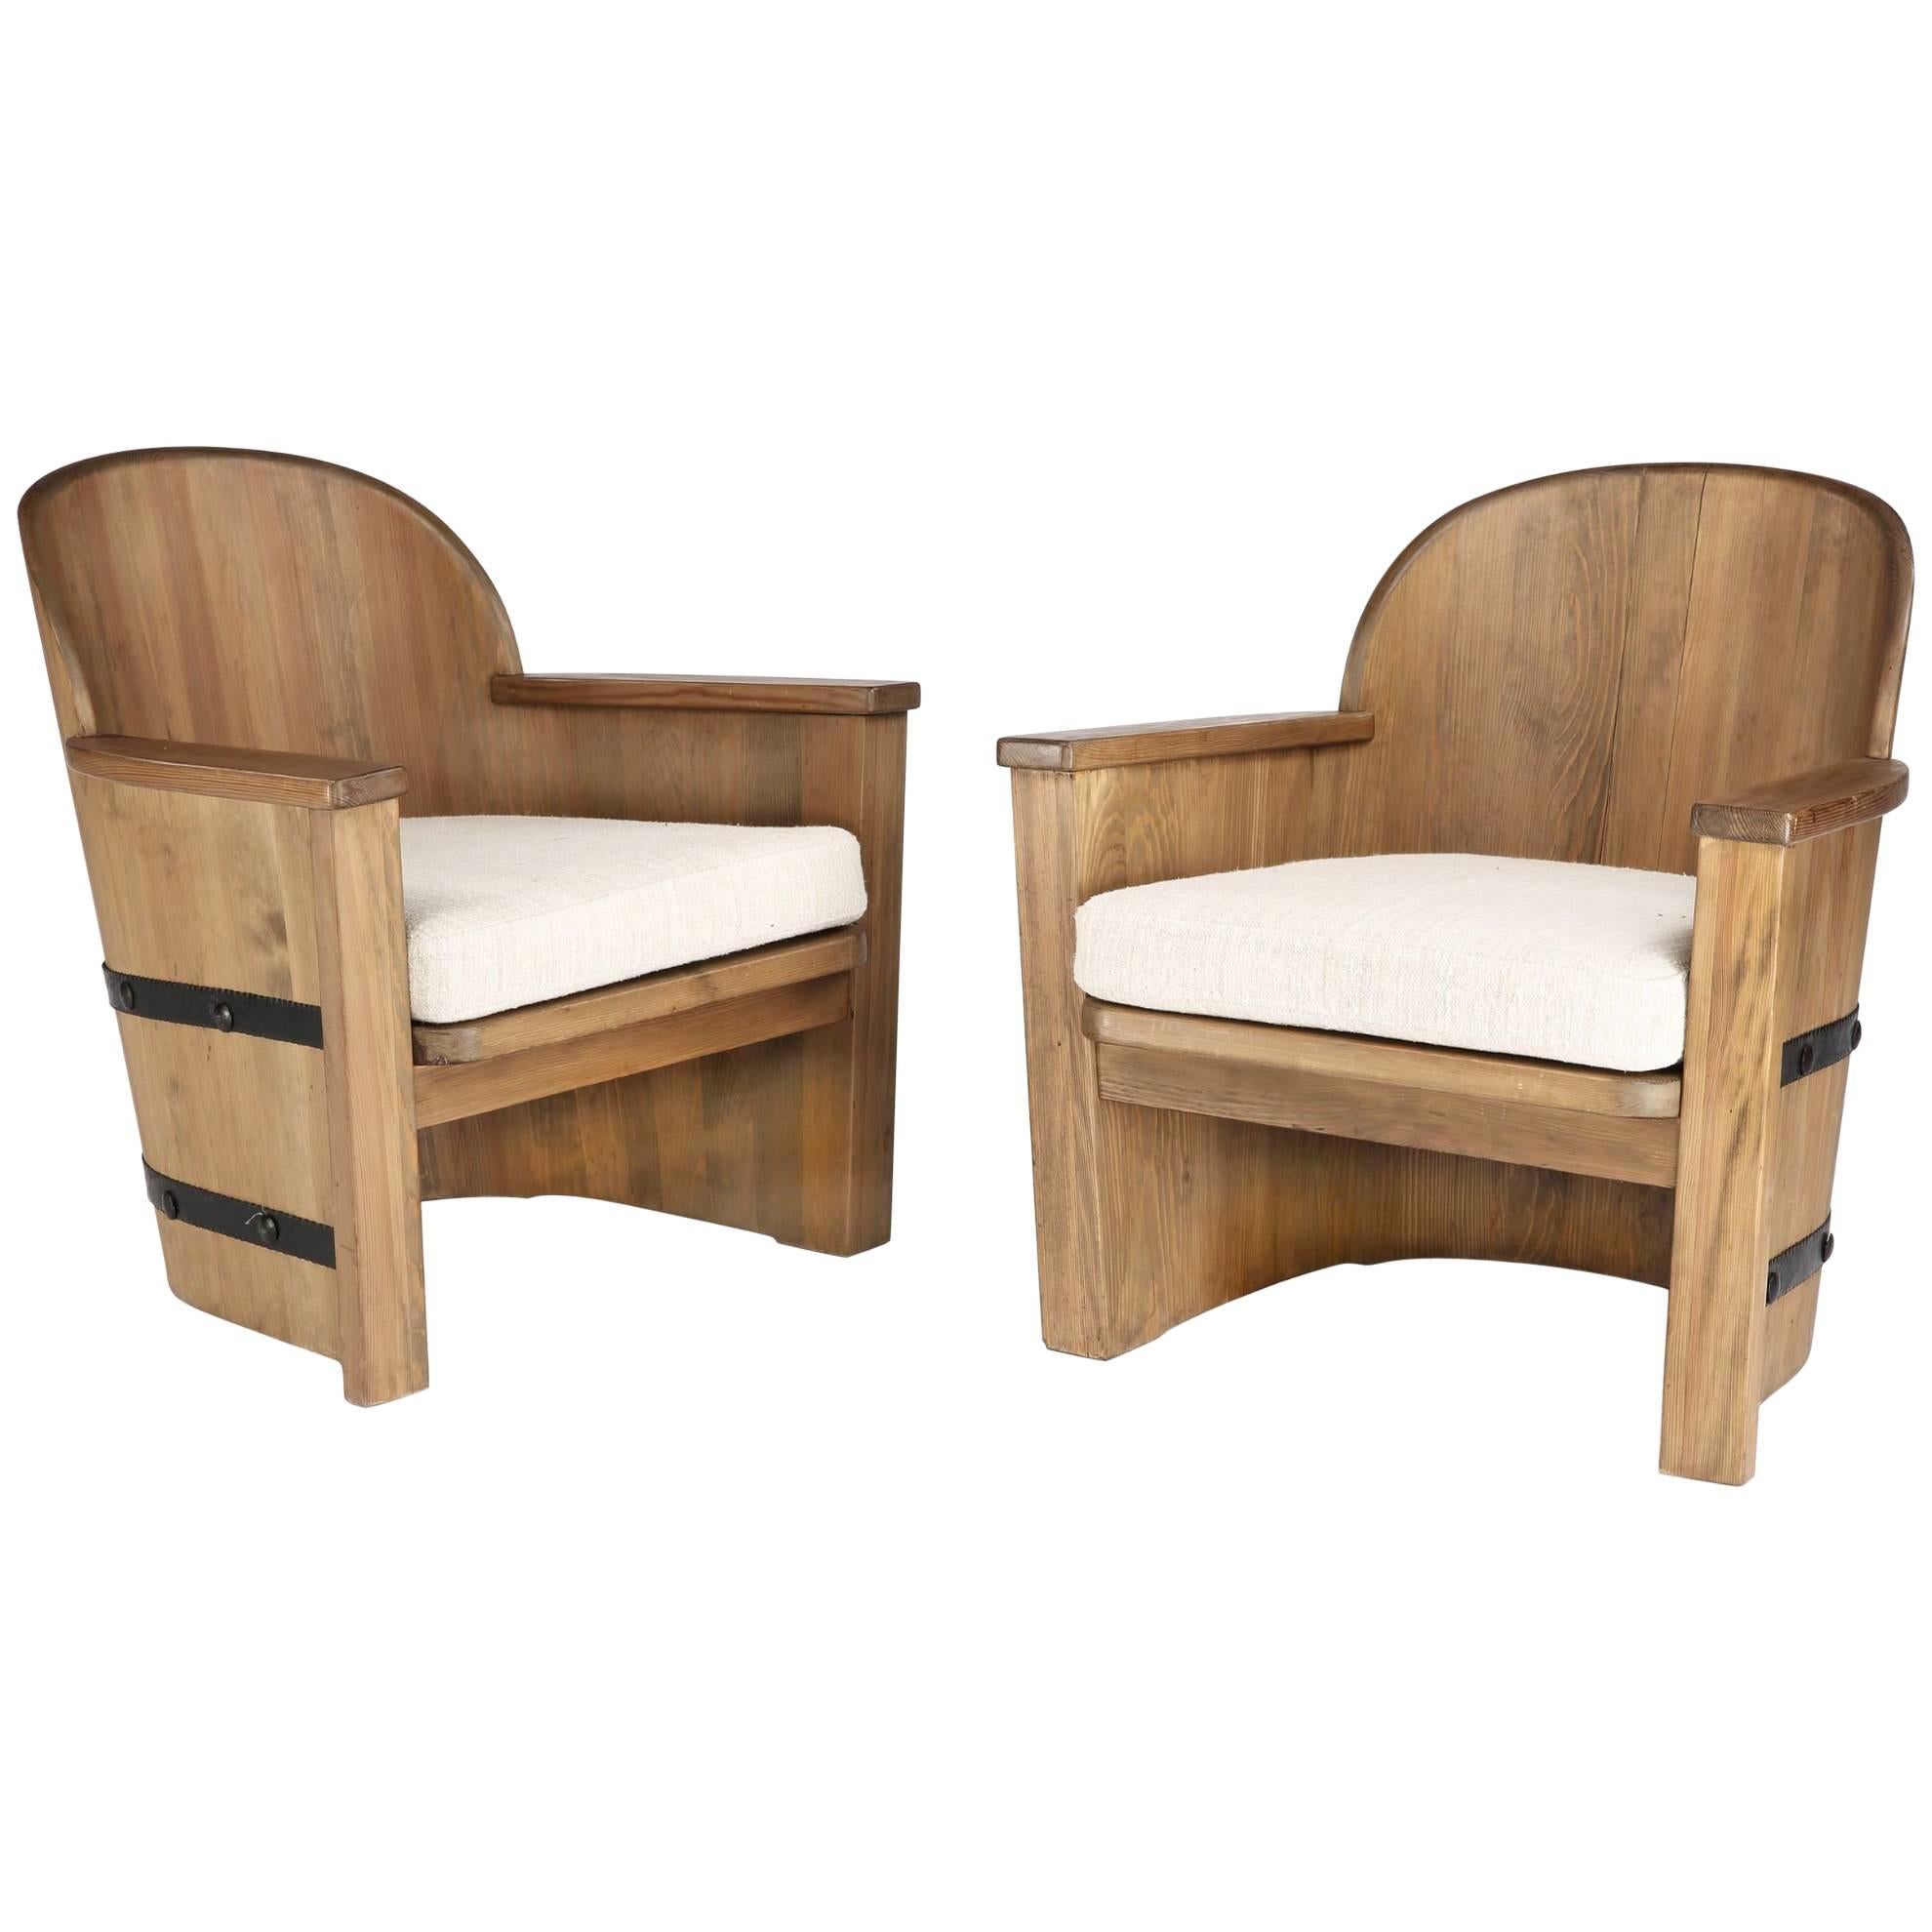 Pair of Axel Hjorth "Barrel" Tub Chairs